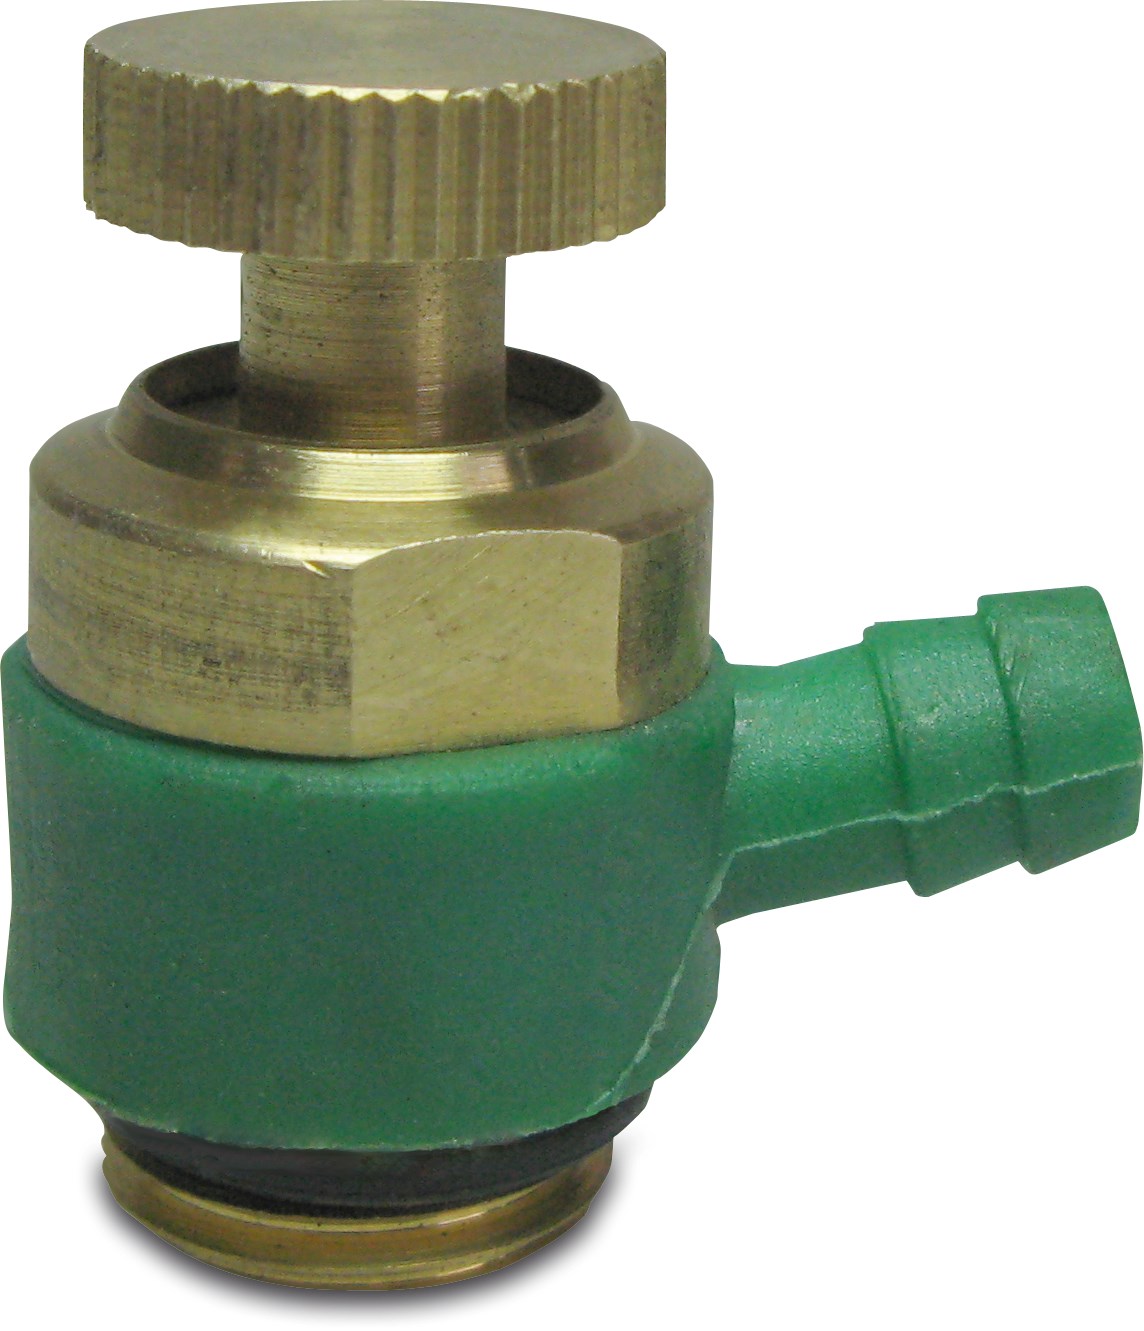 Drain valve brass 1/4" male thread x hose tail